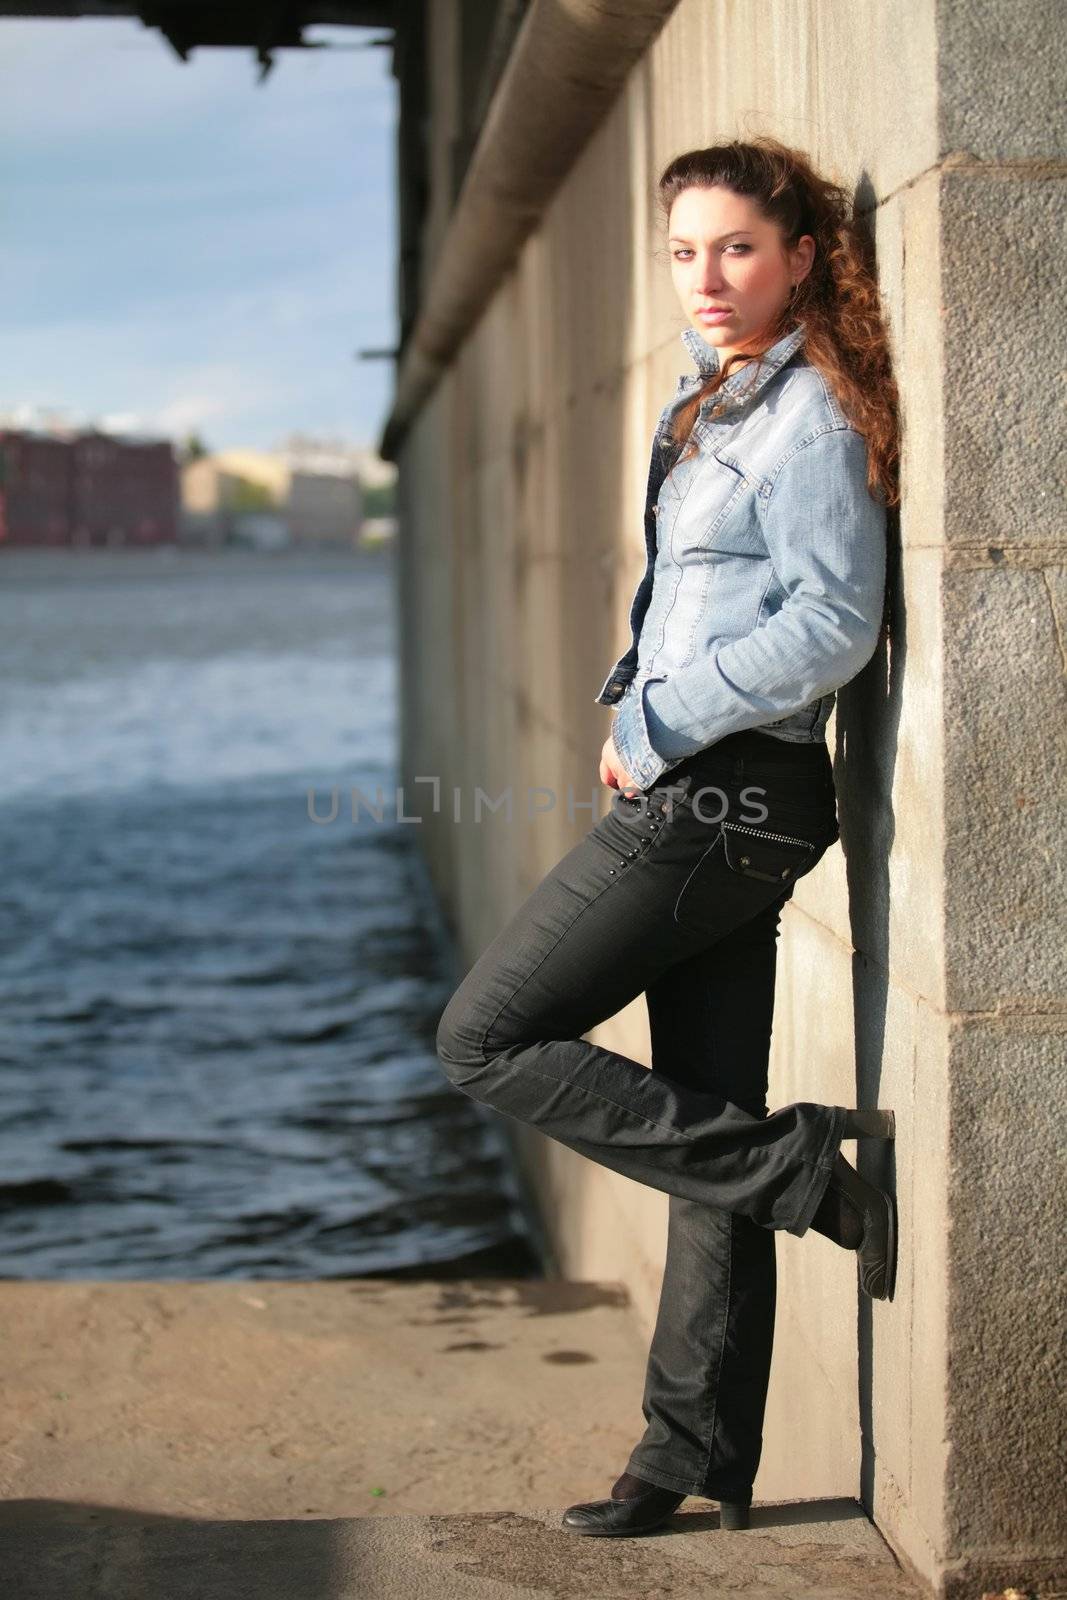 portrait of the beautiful brunette in jeans jacket near stone wall, river